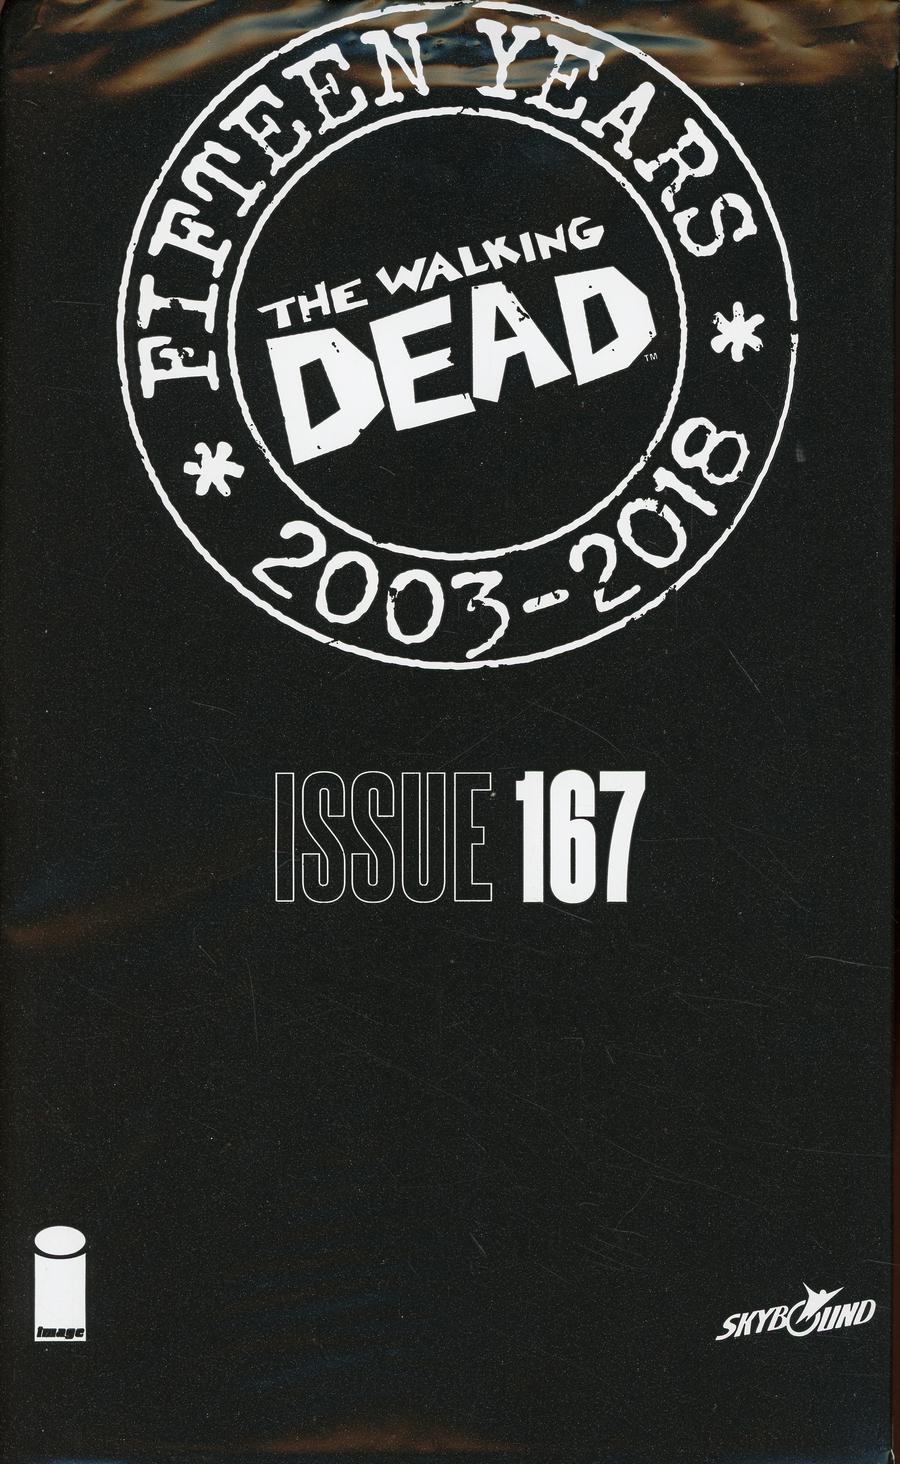 Walking Dead 15th Anniversary Blind Bag Edition Vol. 1 #167